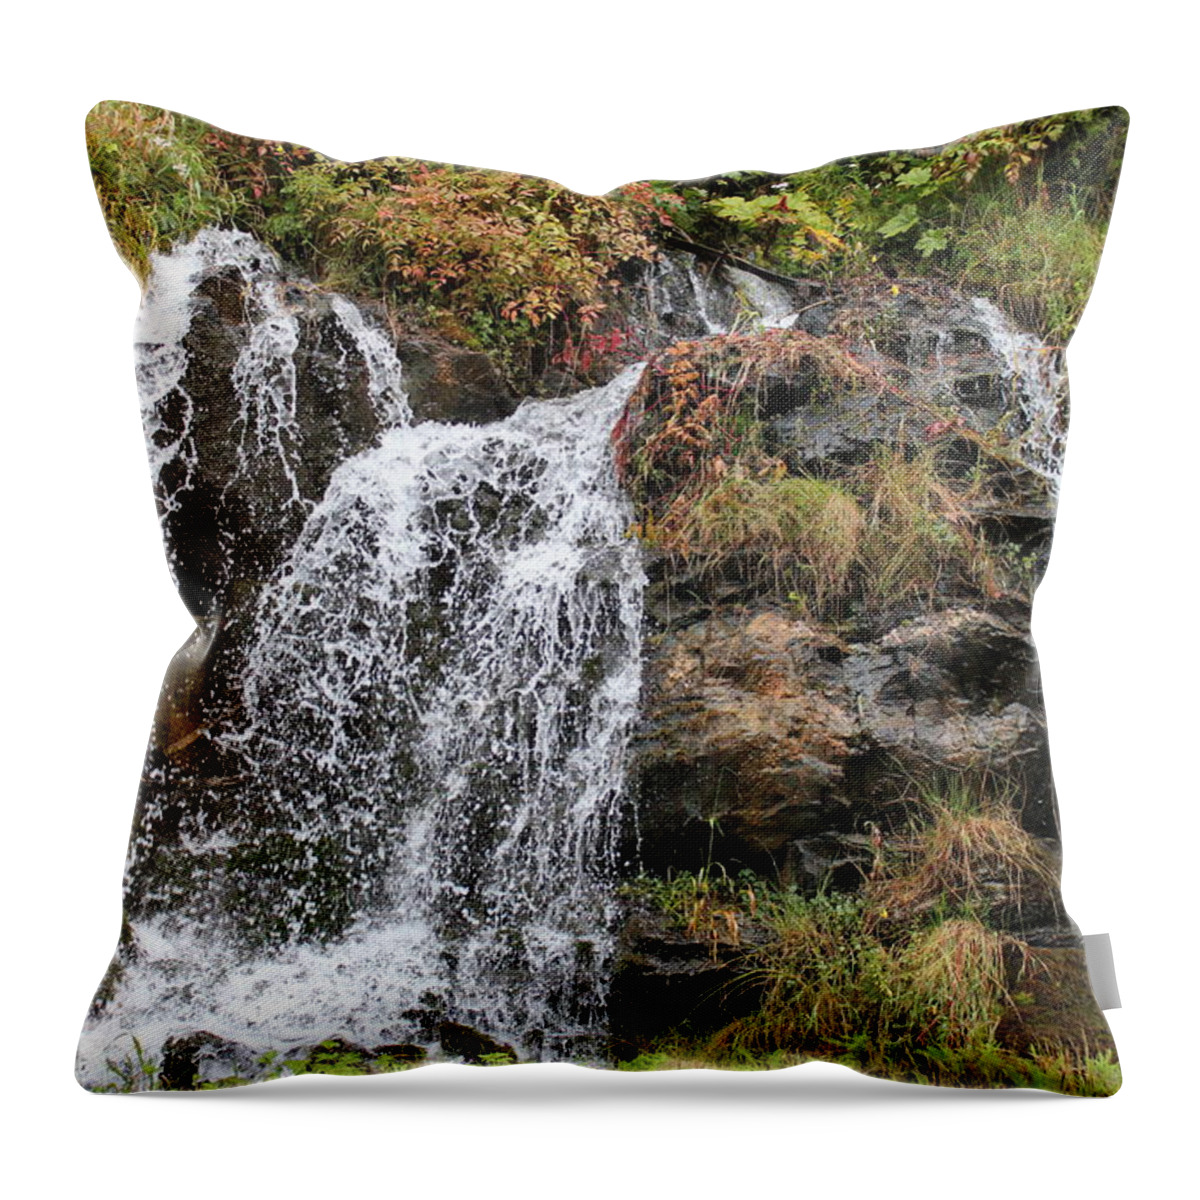 Waterfall Throw Pillow featuring the photograph Alaska Waterfall by Trent Mallett